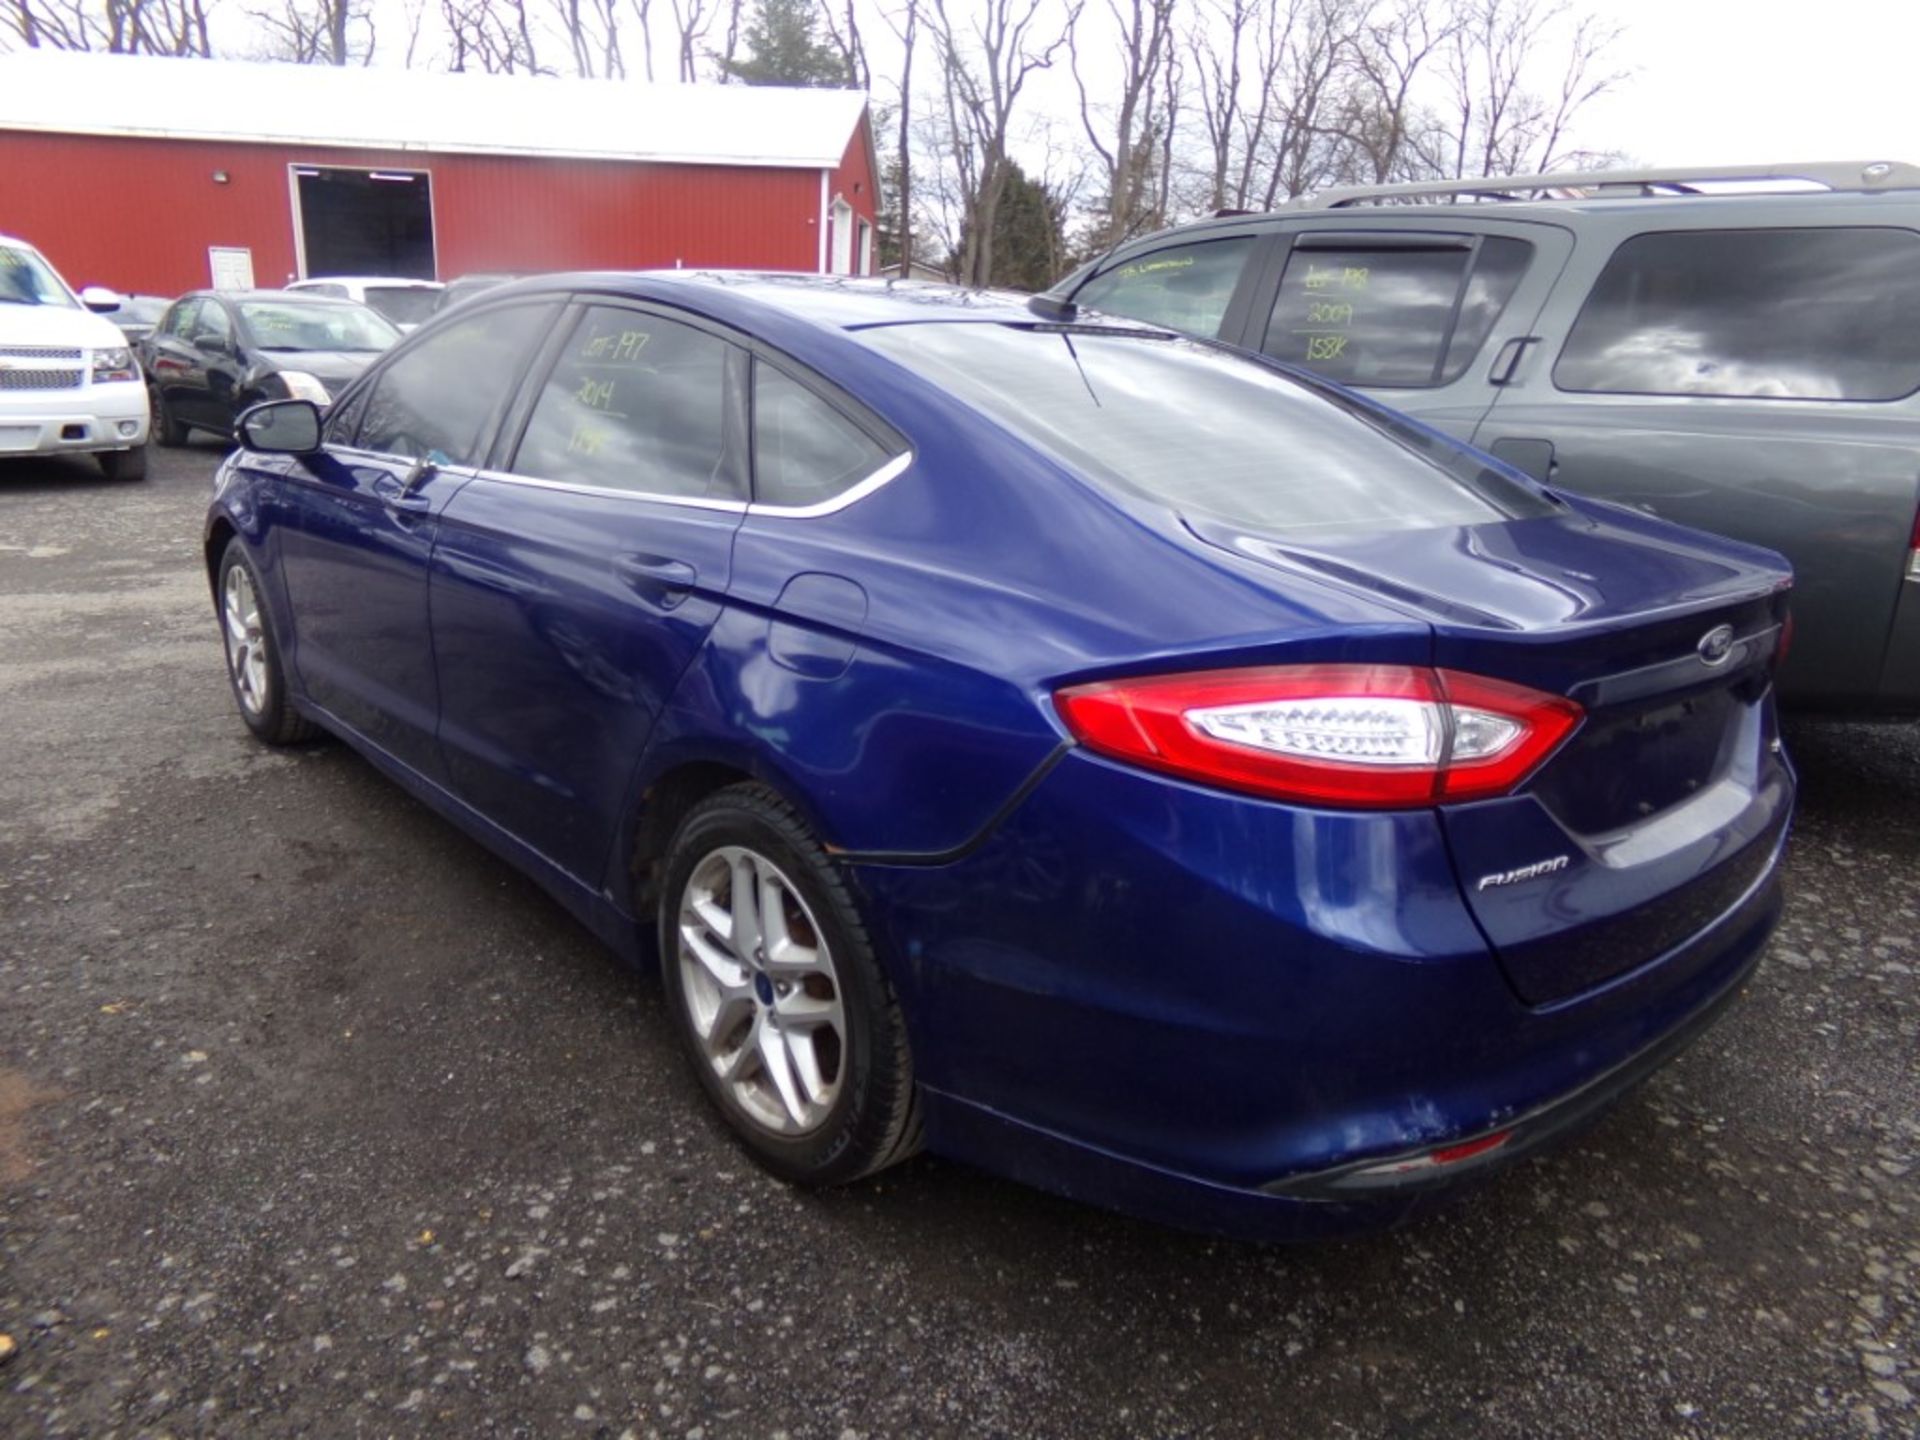 2014 Ford Fusion SE, Blue, 174,739 Miles, VIN#1FA6P0H7XE5365423, AIR BAG LIGHT IS ON, MINOR DAMAGE - Bild 2 aus 18